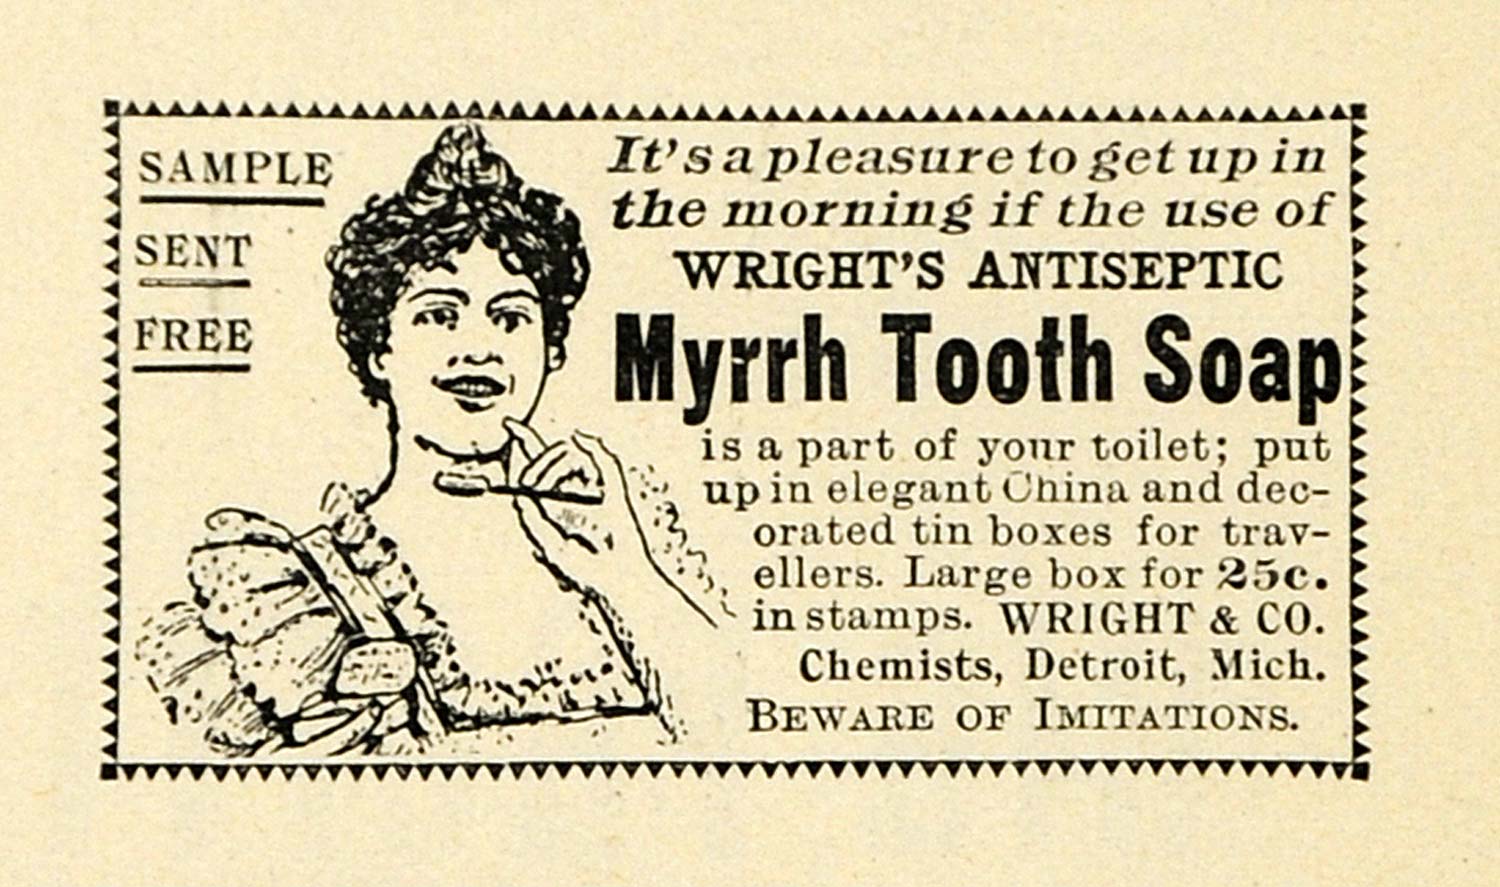 1895 Ad Wrights Antiseptic Myrrh Tooth Soap Toilet Free - ORIGINAL TFO1